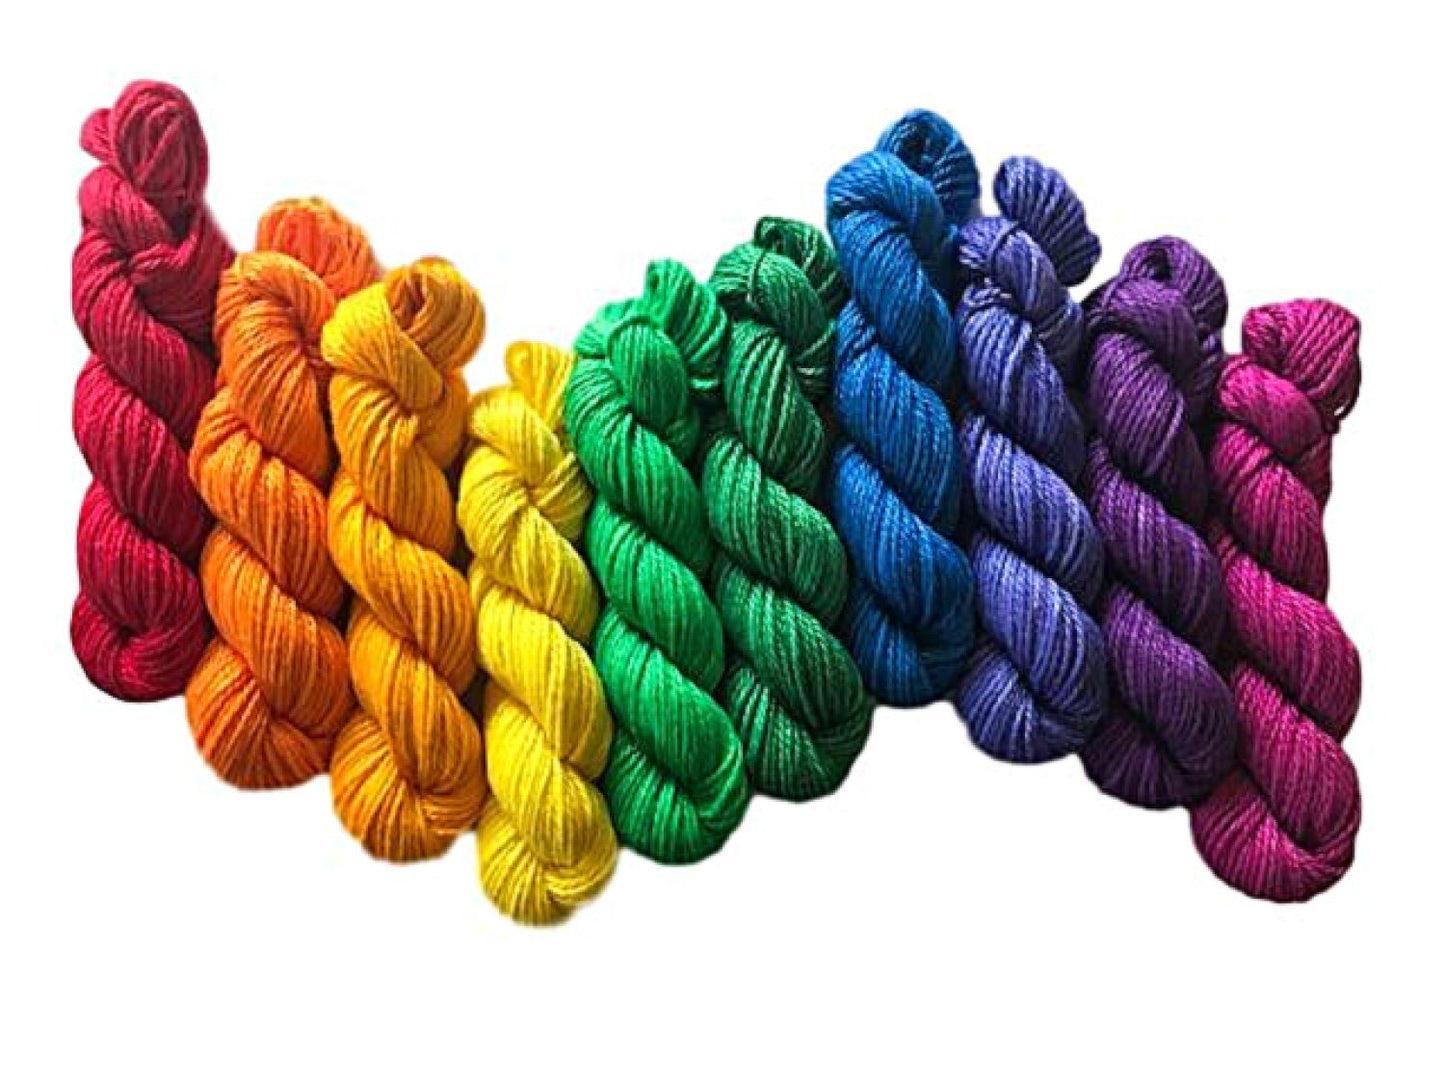 Vegan Yarn Kit - Hand Dyed Rainbow Fiber Set - DK / Light Worsted Bamboo Cotton Semi Solids - (10) 53 yd skeins - 3 Ply Artisan Baby Yarn